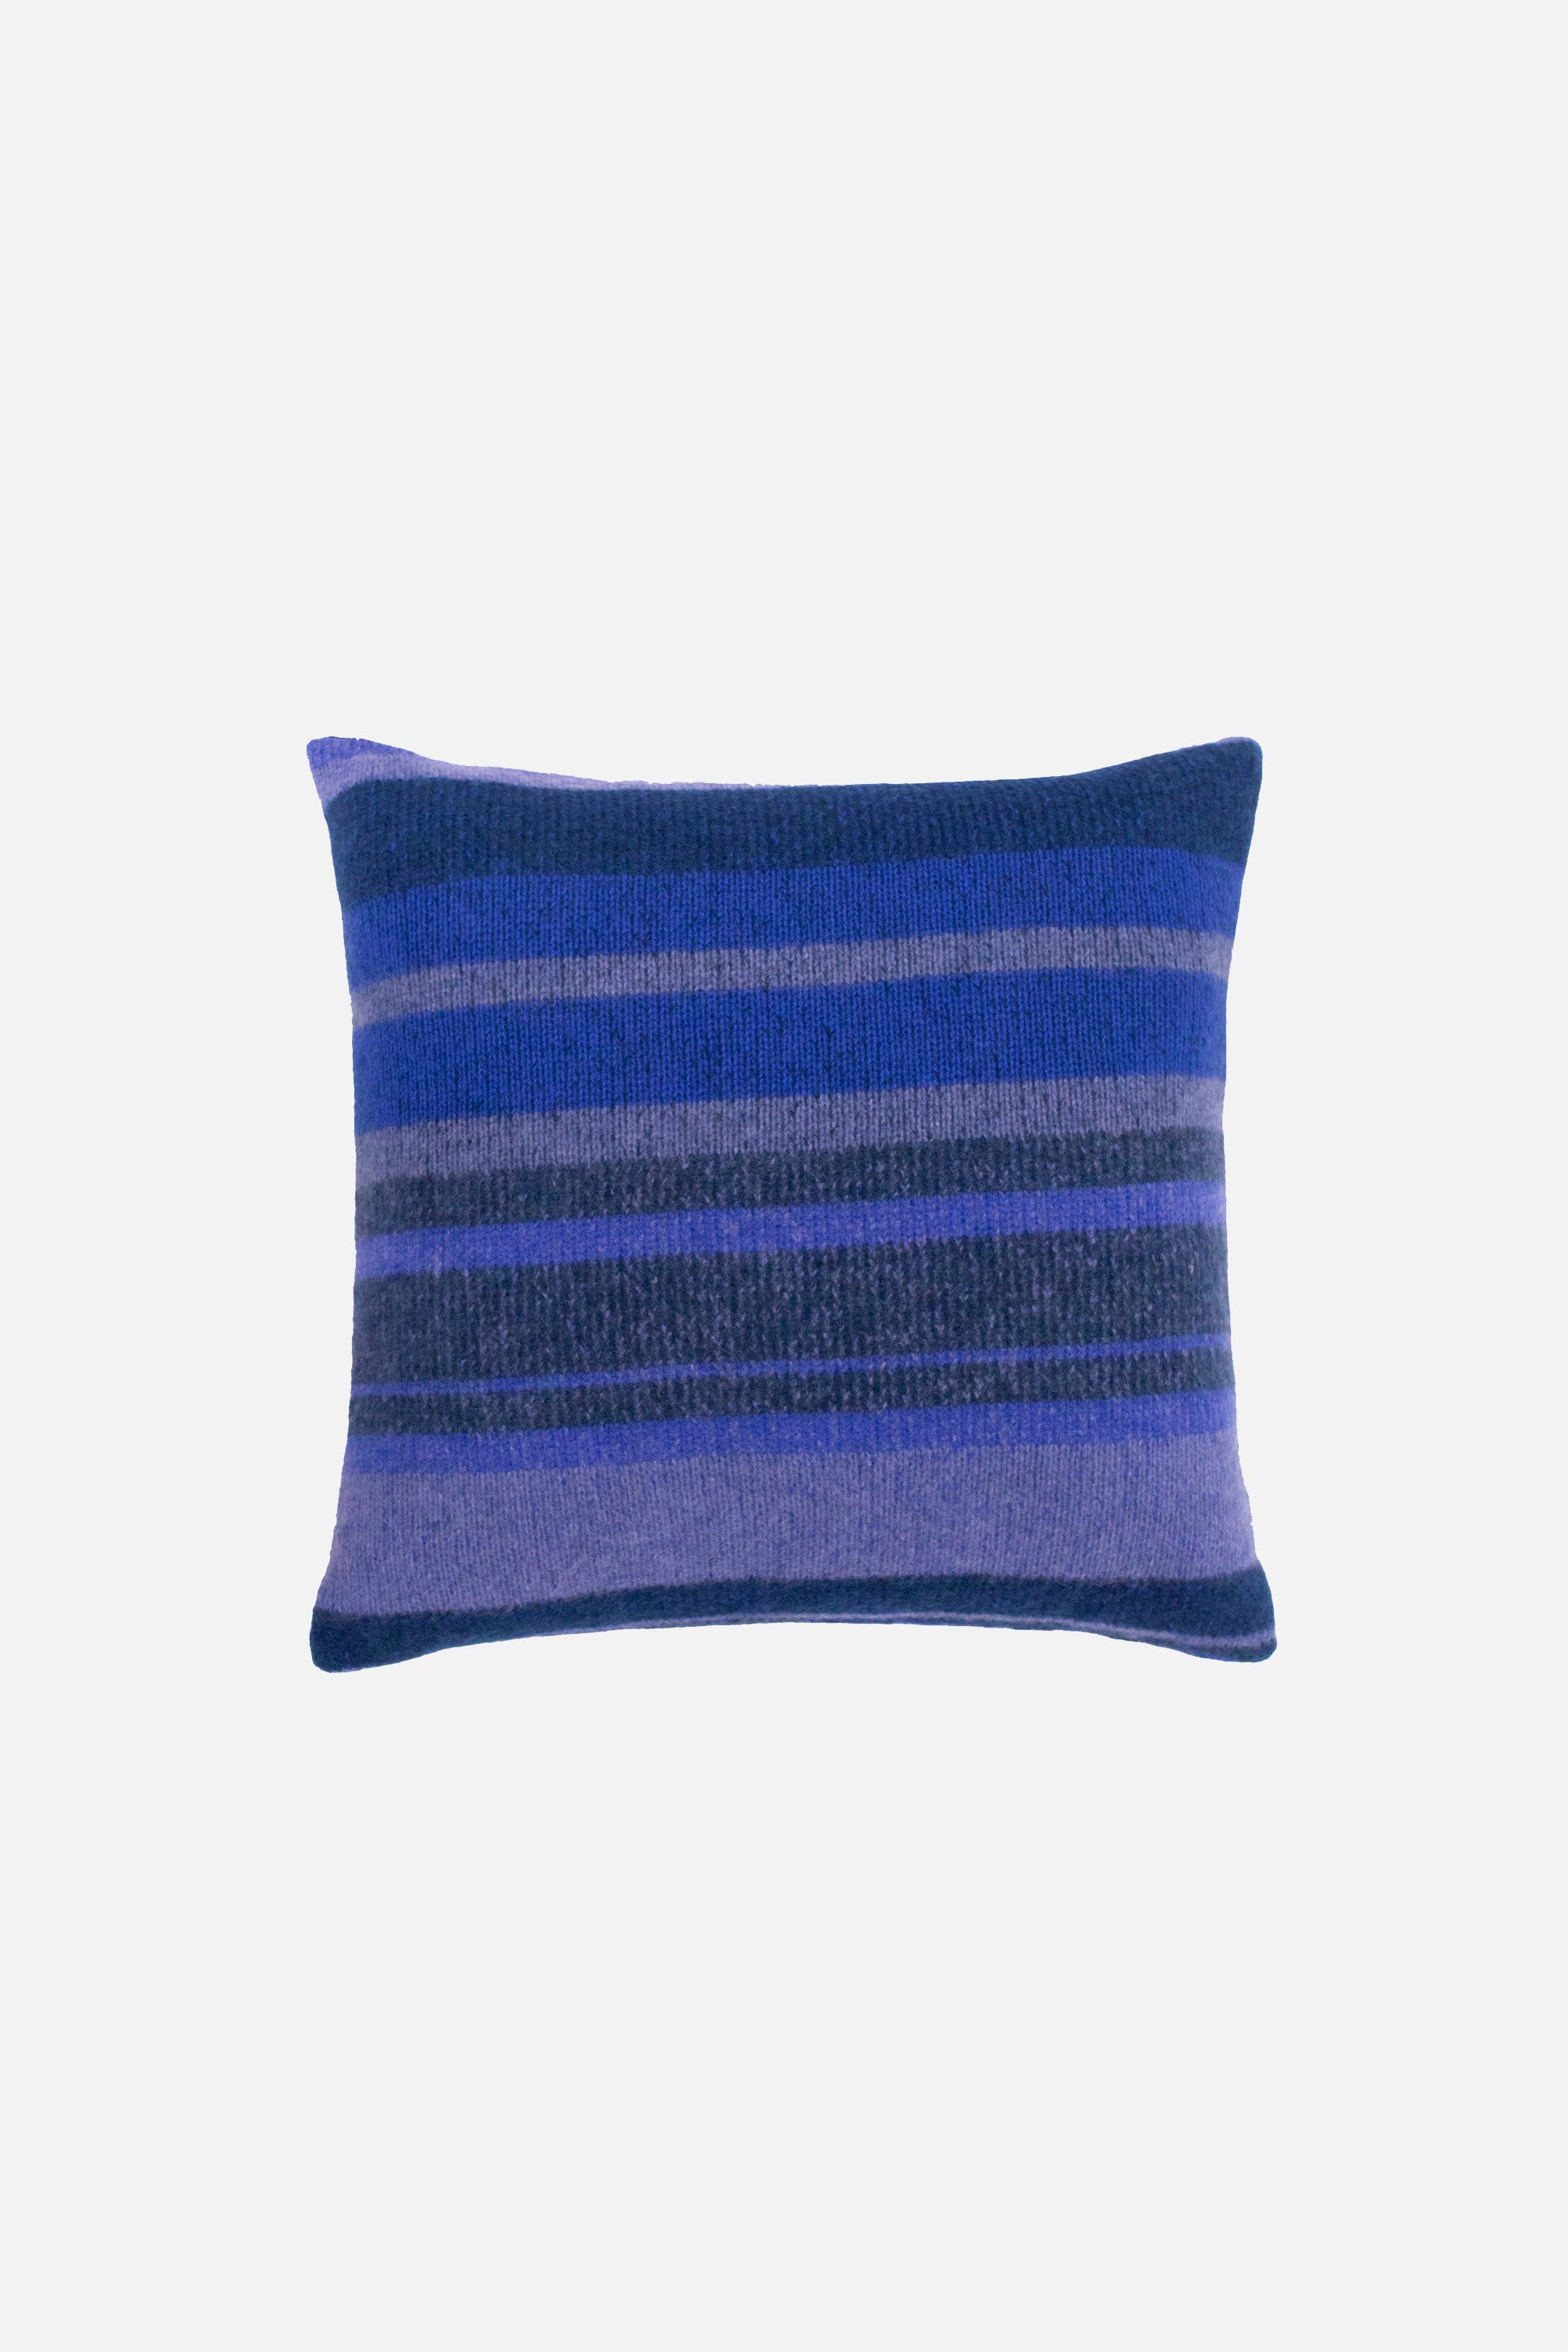 The Elder Statesman Blue Molecule Square Pillow